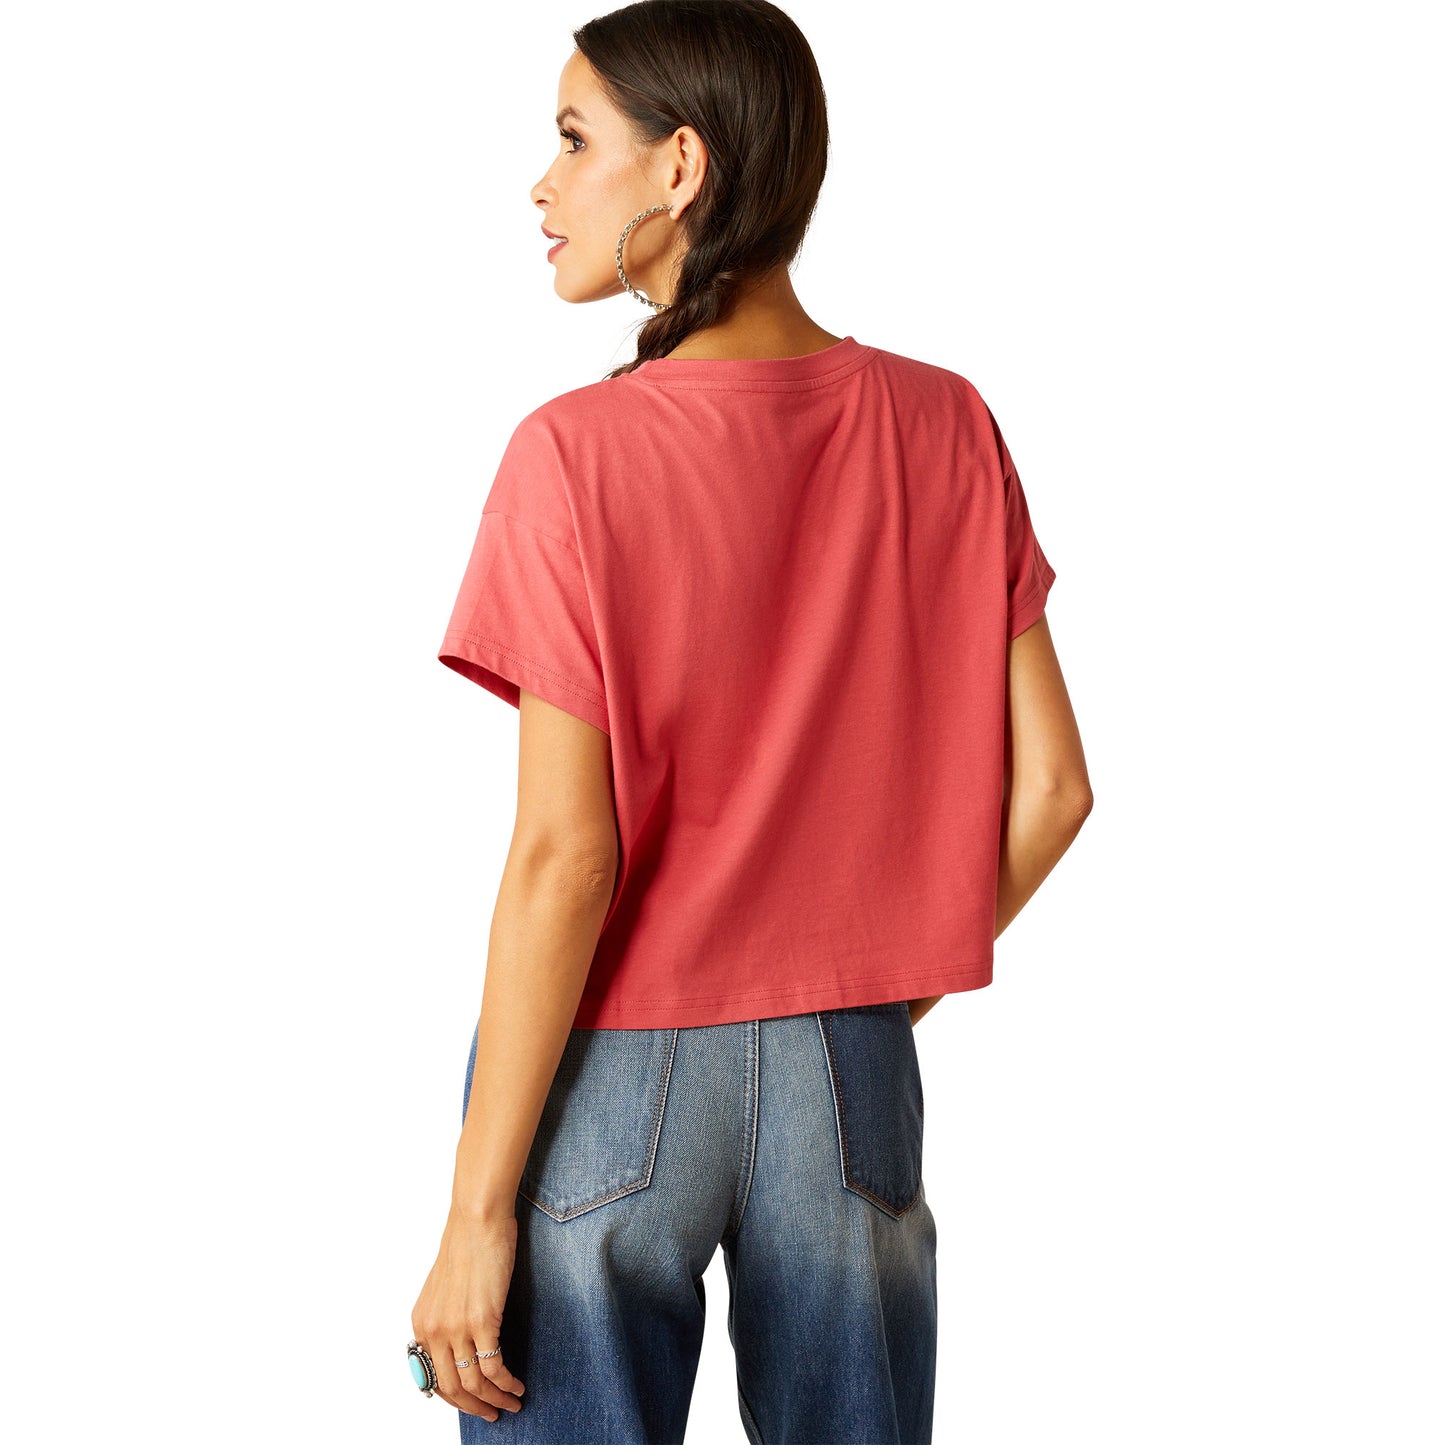 Ariat Ladies Lone Star Garnet Rose Graphic T-Shirt 10051299